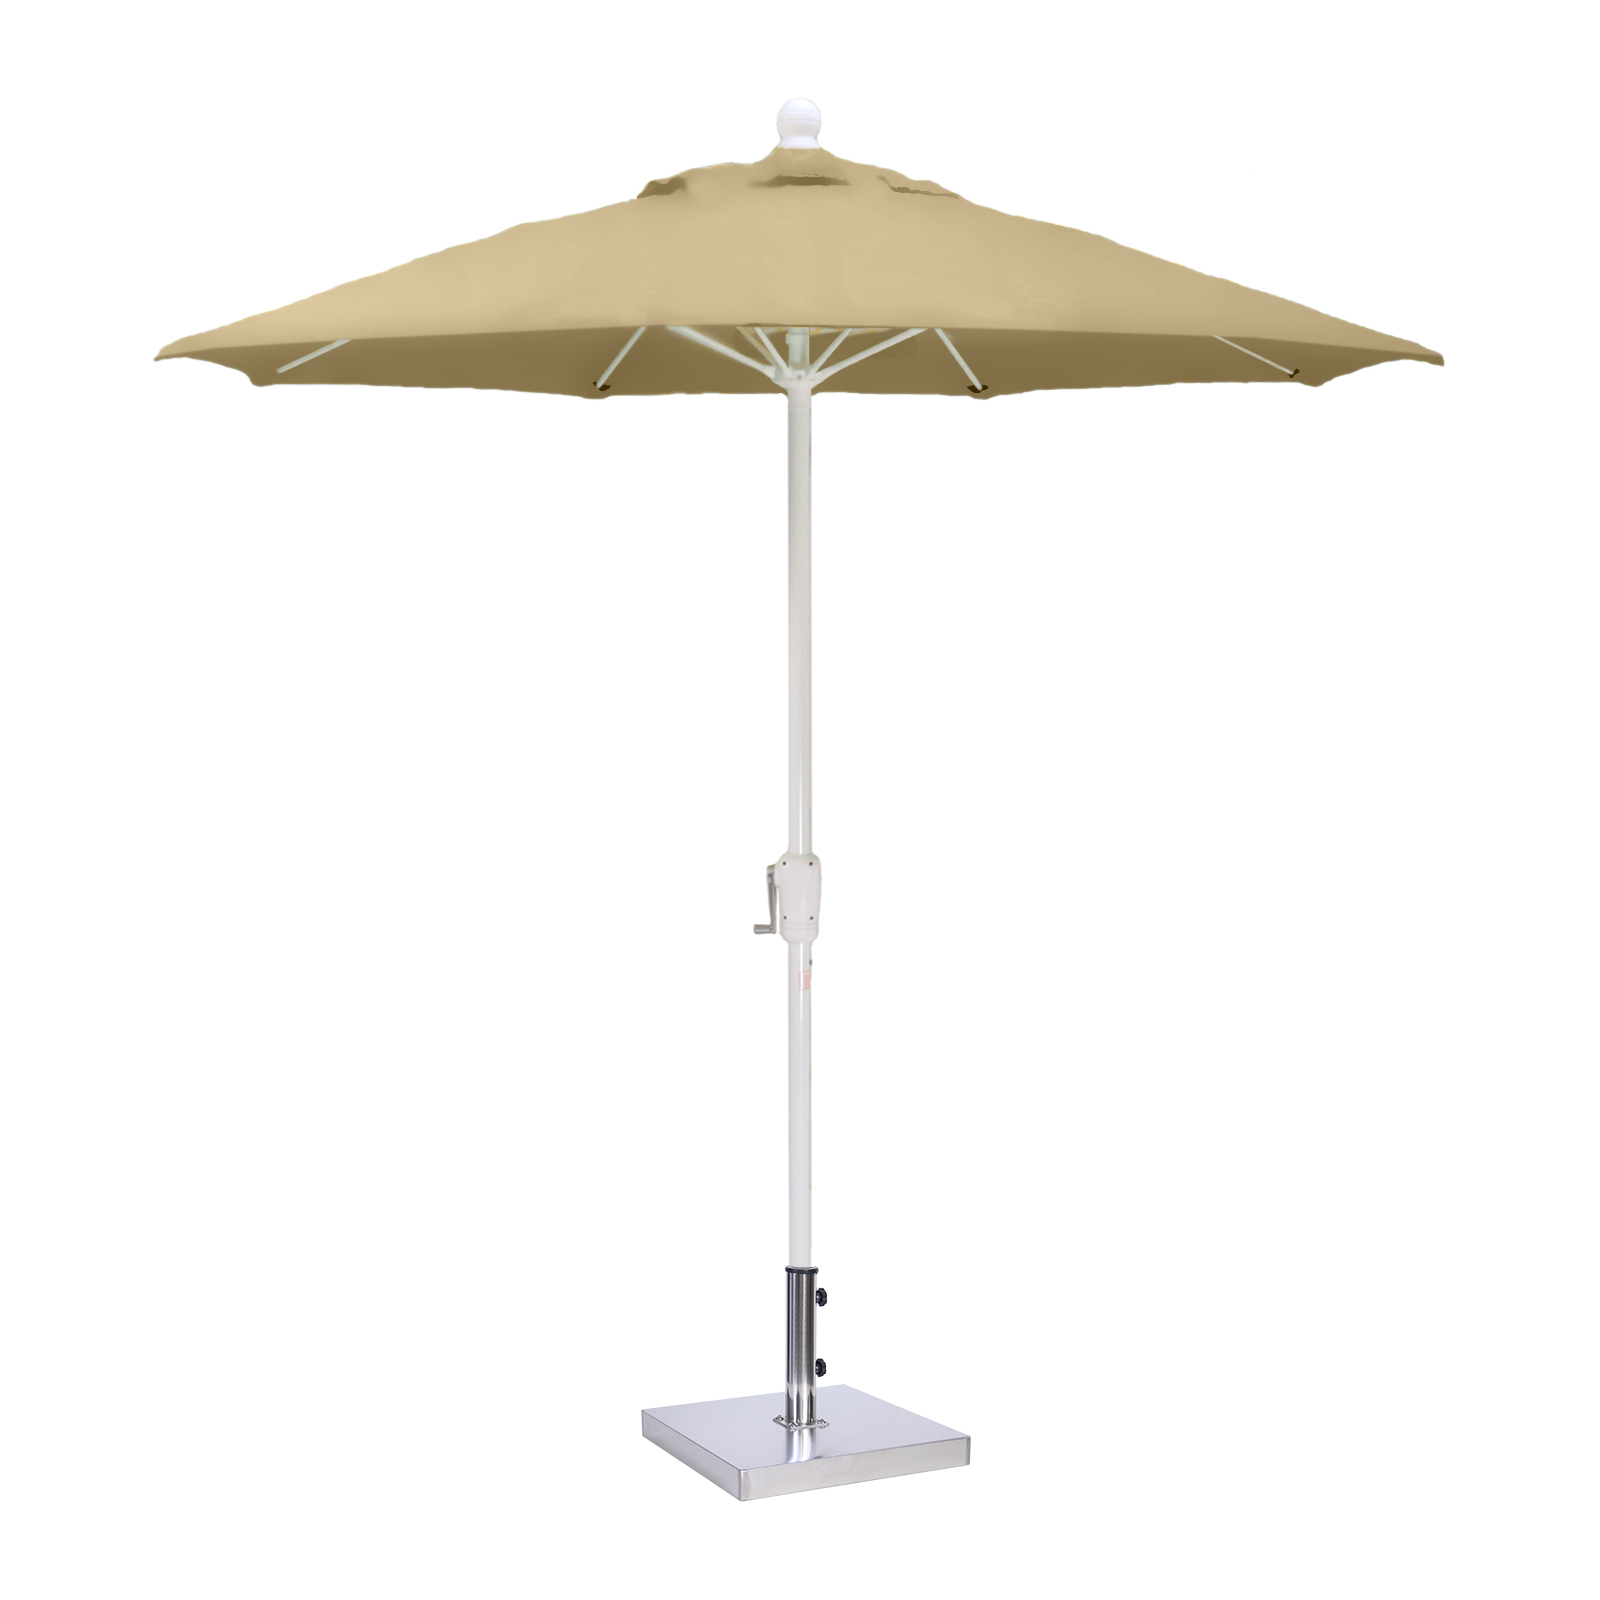 MiYu Furniture  9 ft Fiberglass Market Umbrella with Crank - White Frame